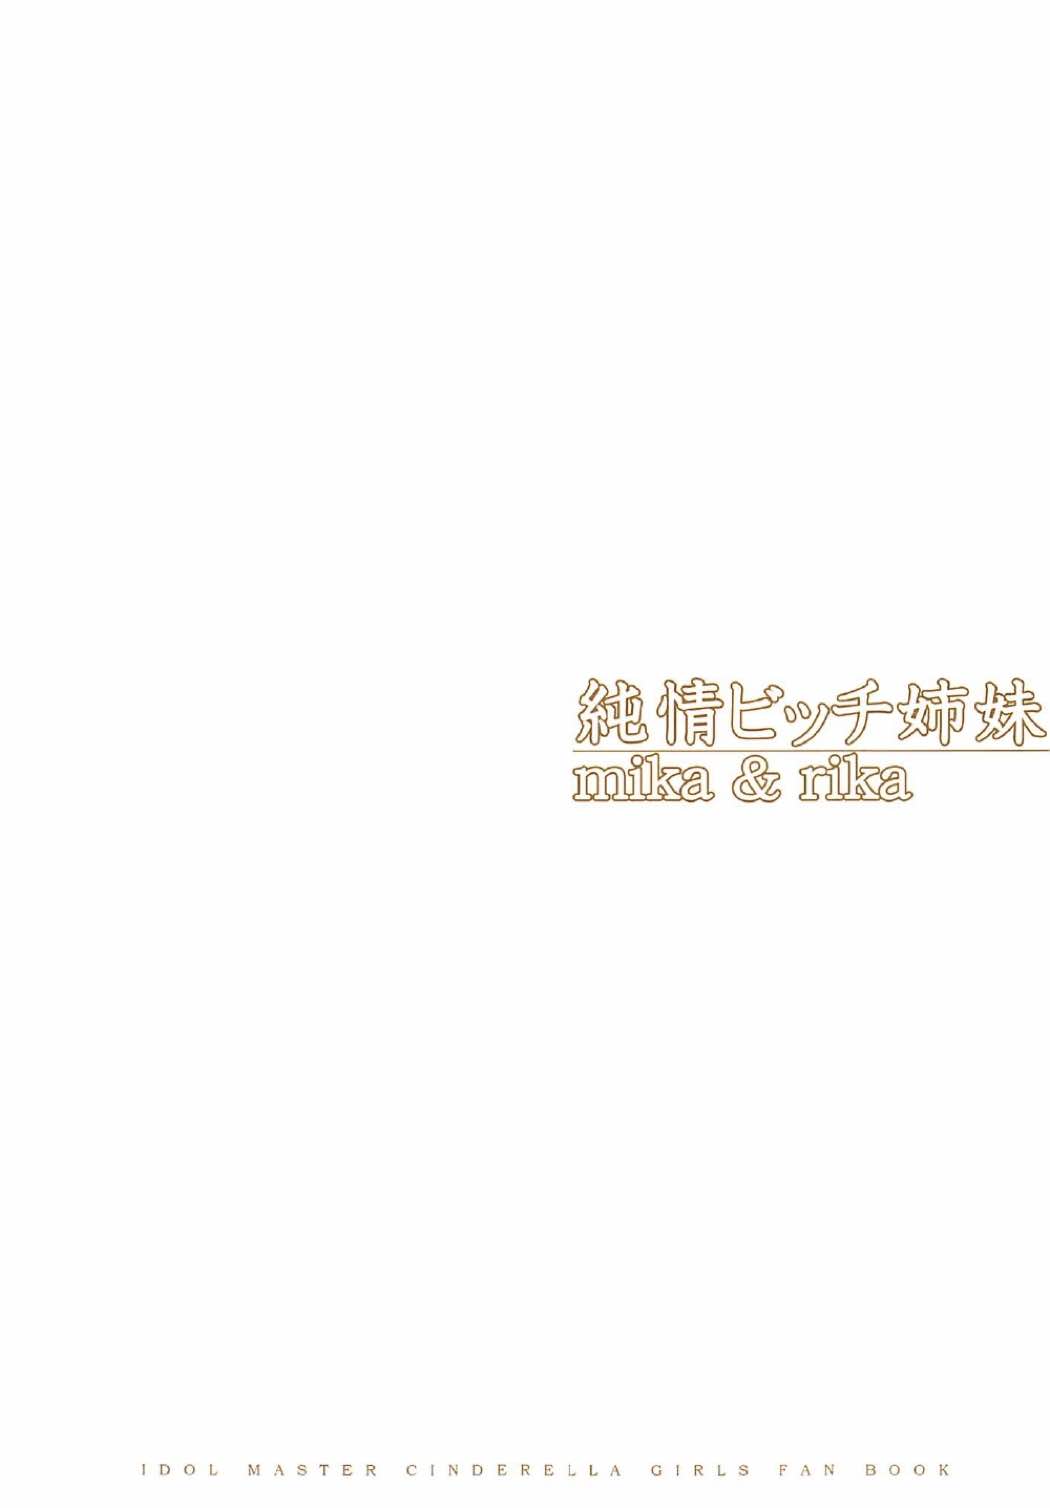 (C91) [O.N Art Works (Oni-noboru)] 純情ビッチ姉妹 mika & rika (アイドルマスター シンデレラガールズ)